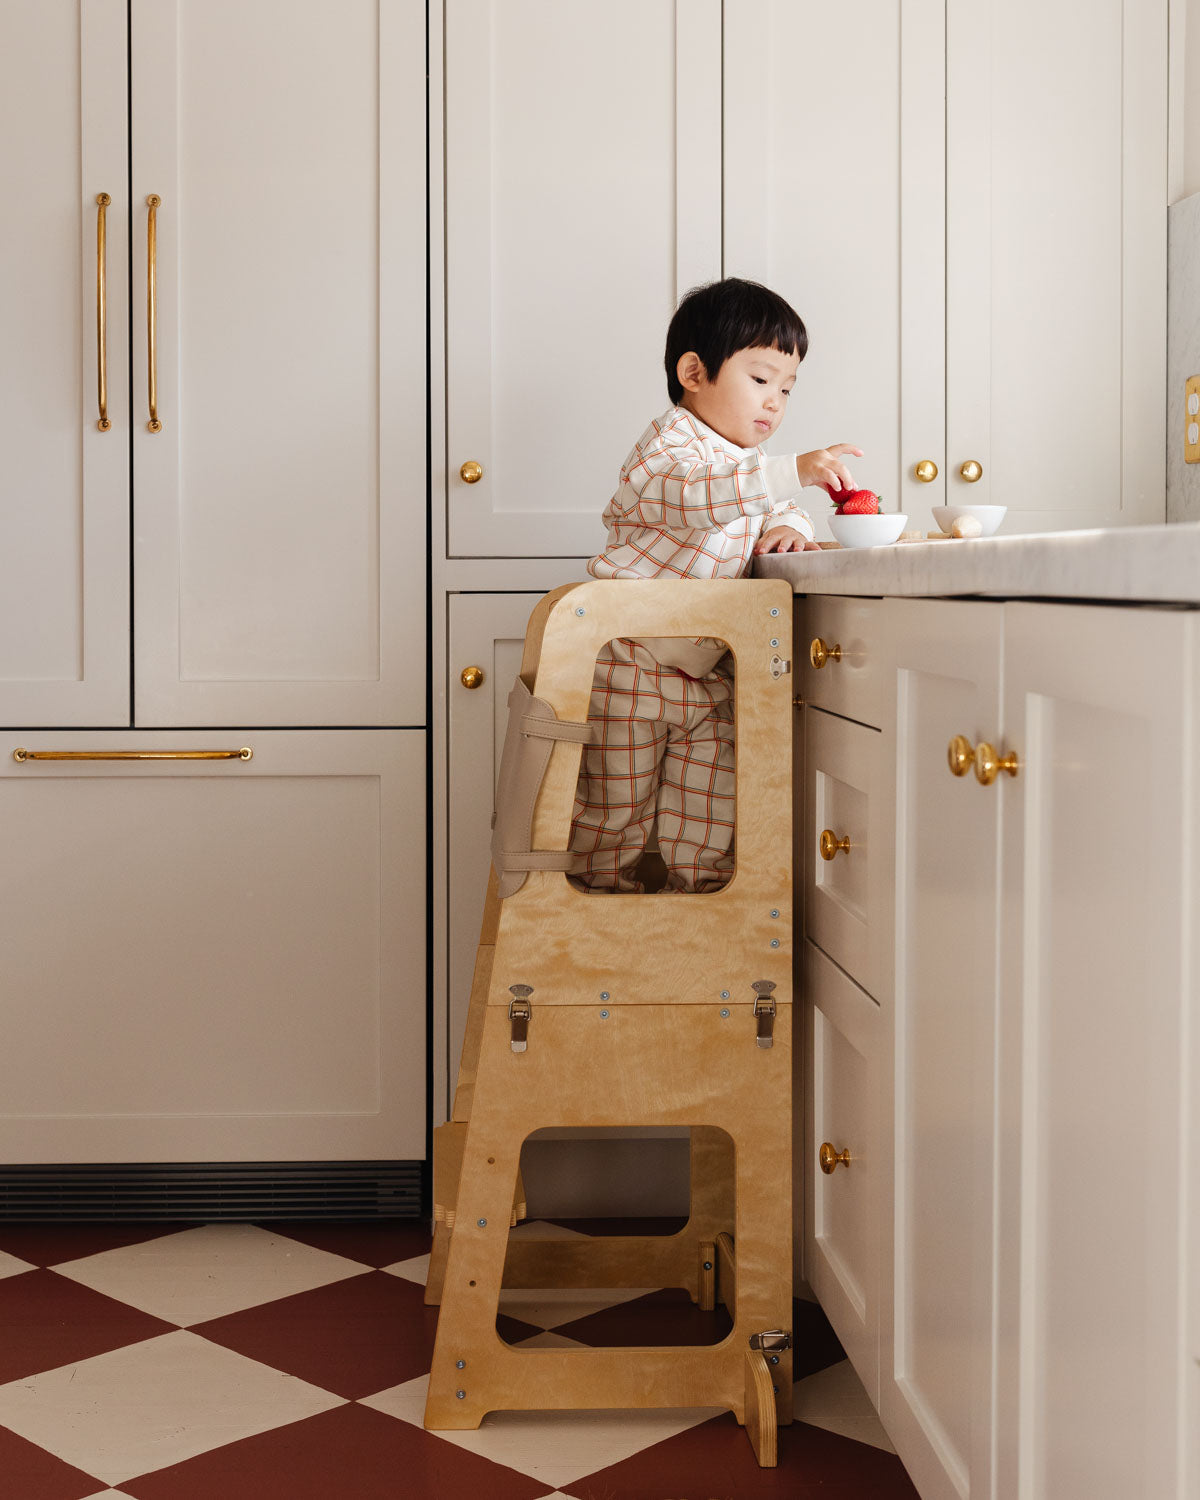 Piccalio Mini Chef Convertible Tower | Ten Little Kids' Kitchen Gear